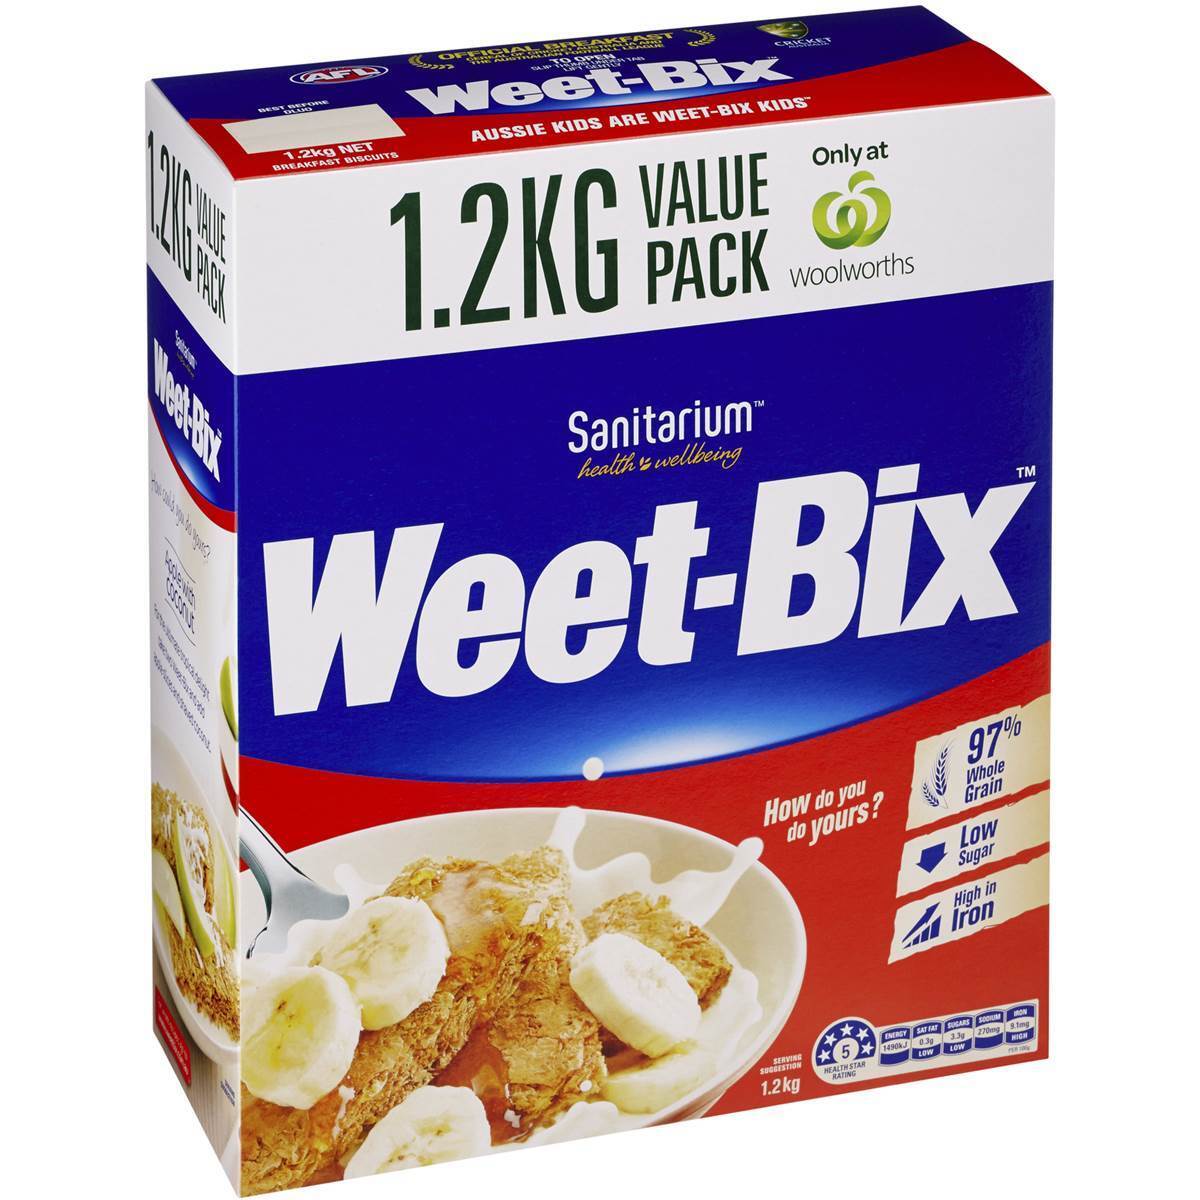 Sanitarium Weetbix Value Pack 1.2kg